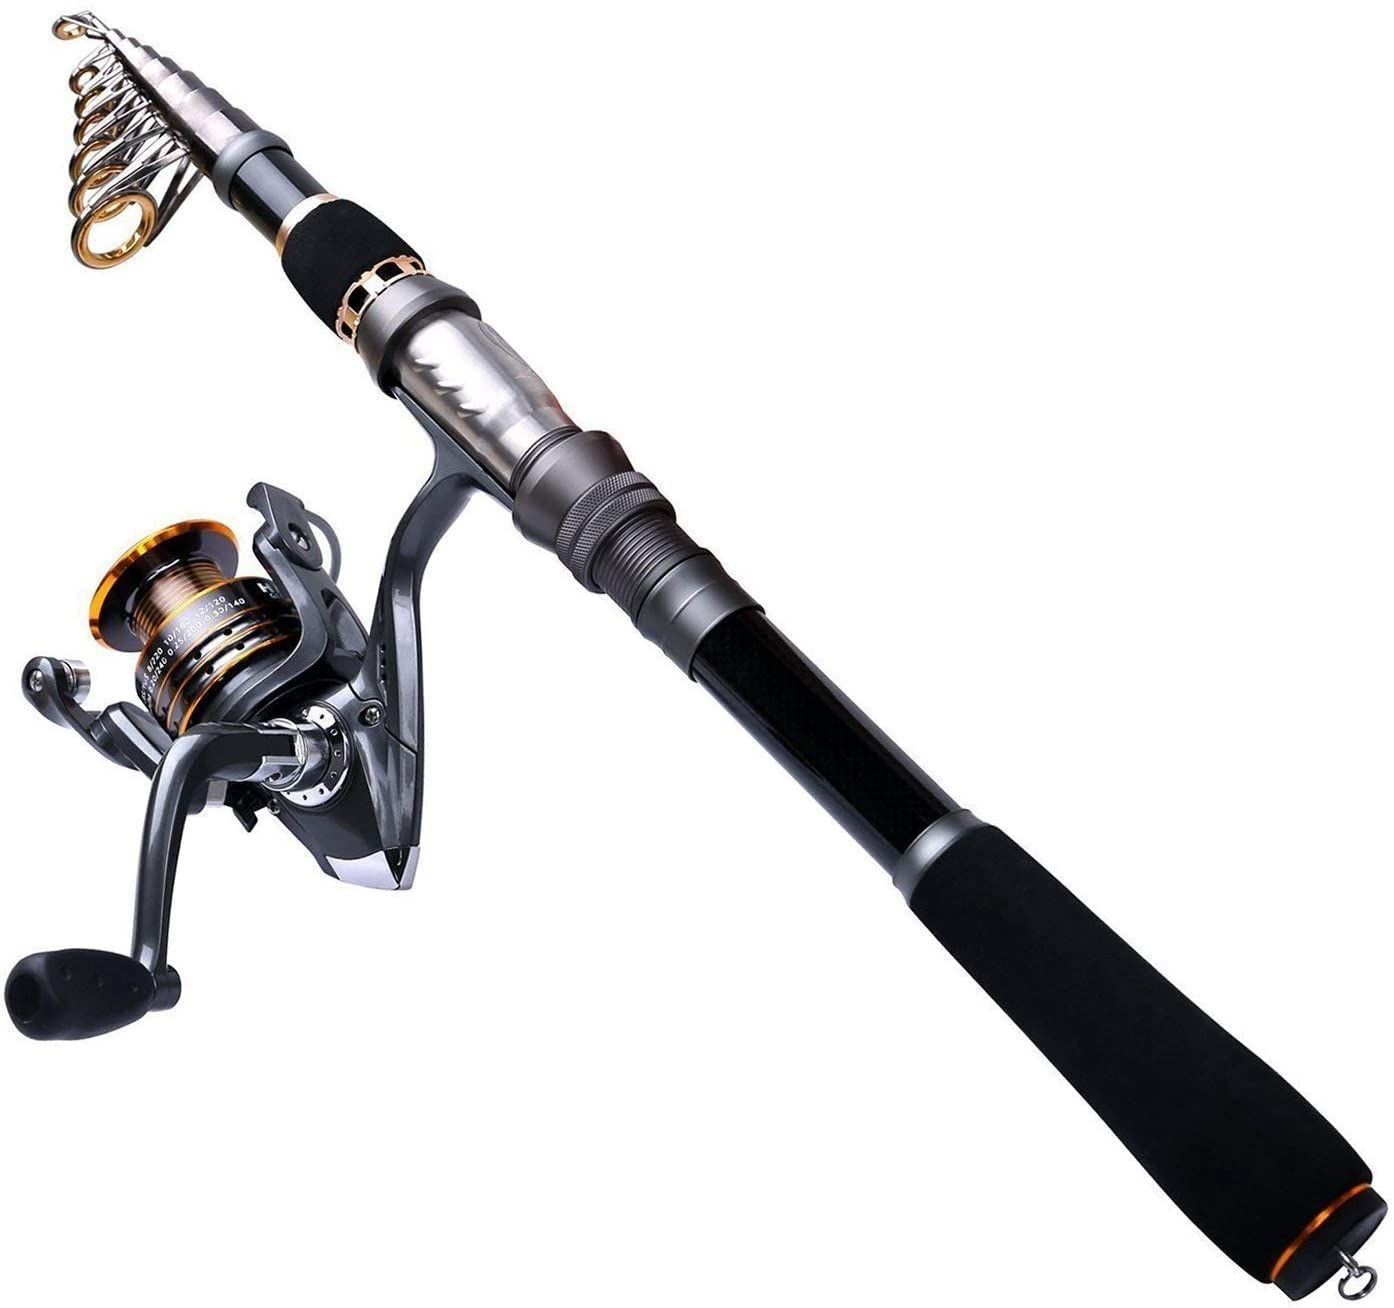 Cheap telescopic fishing rod review 